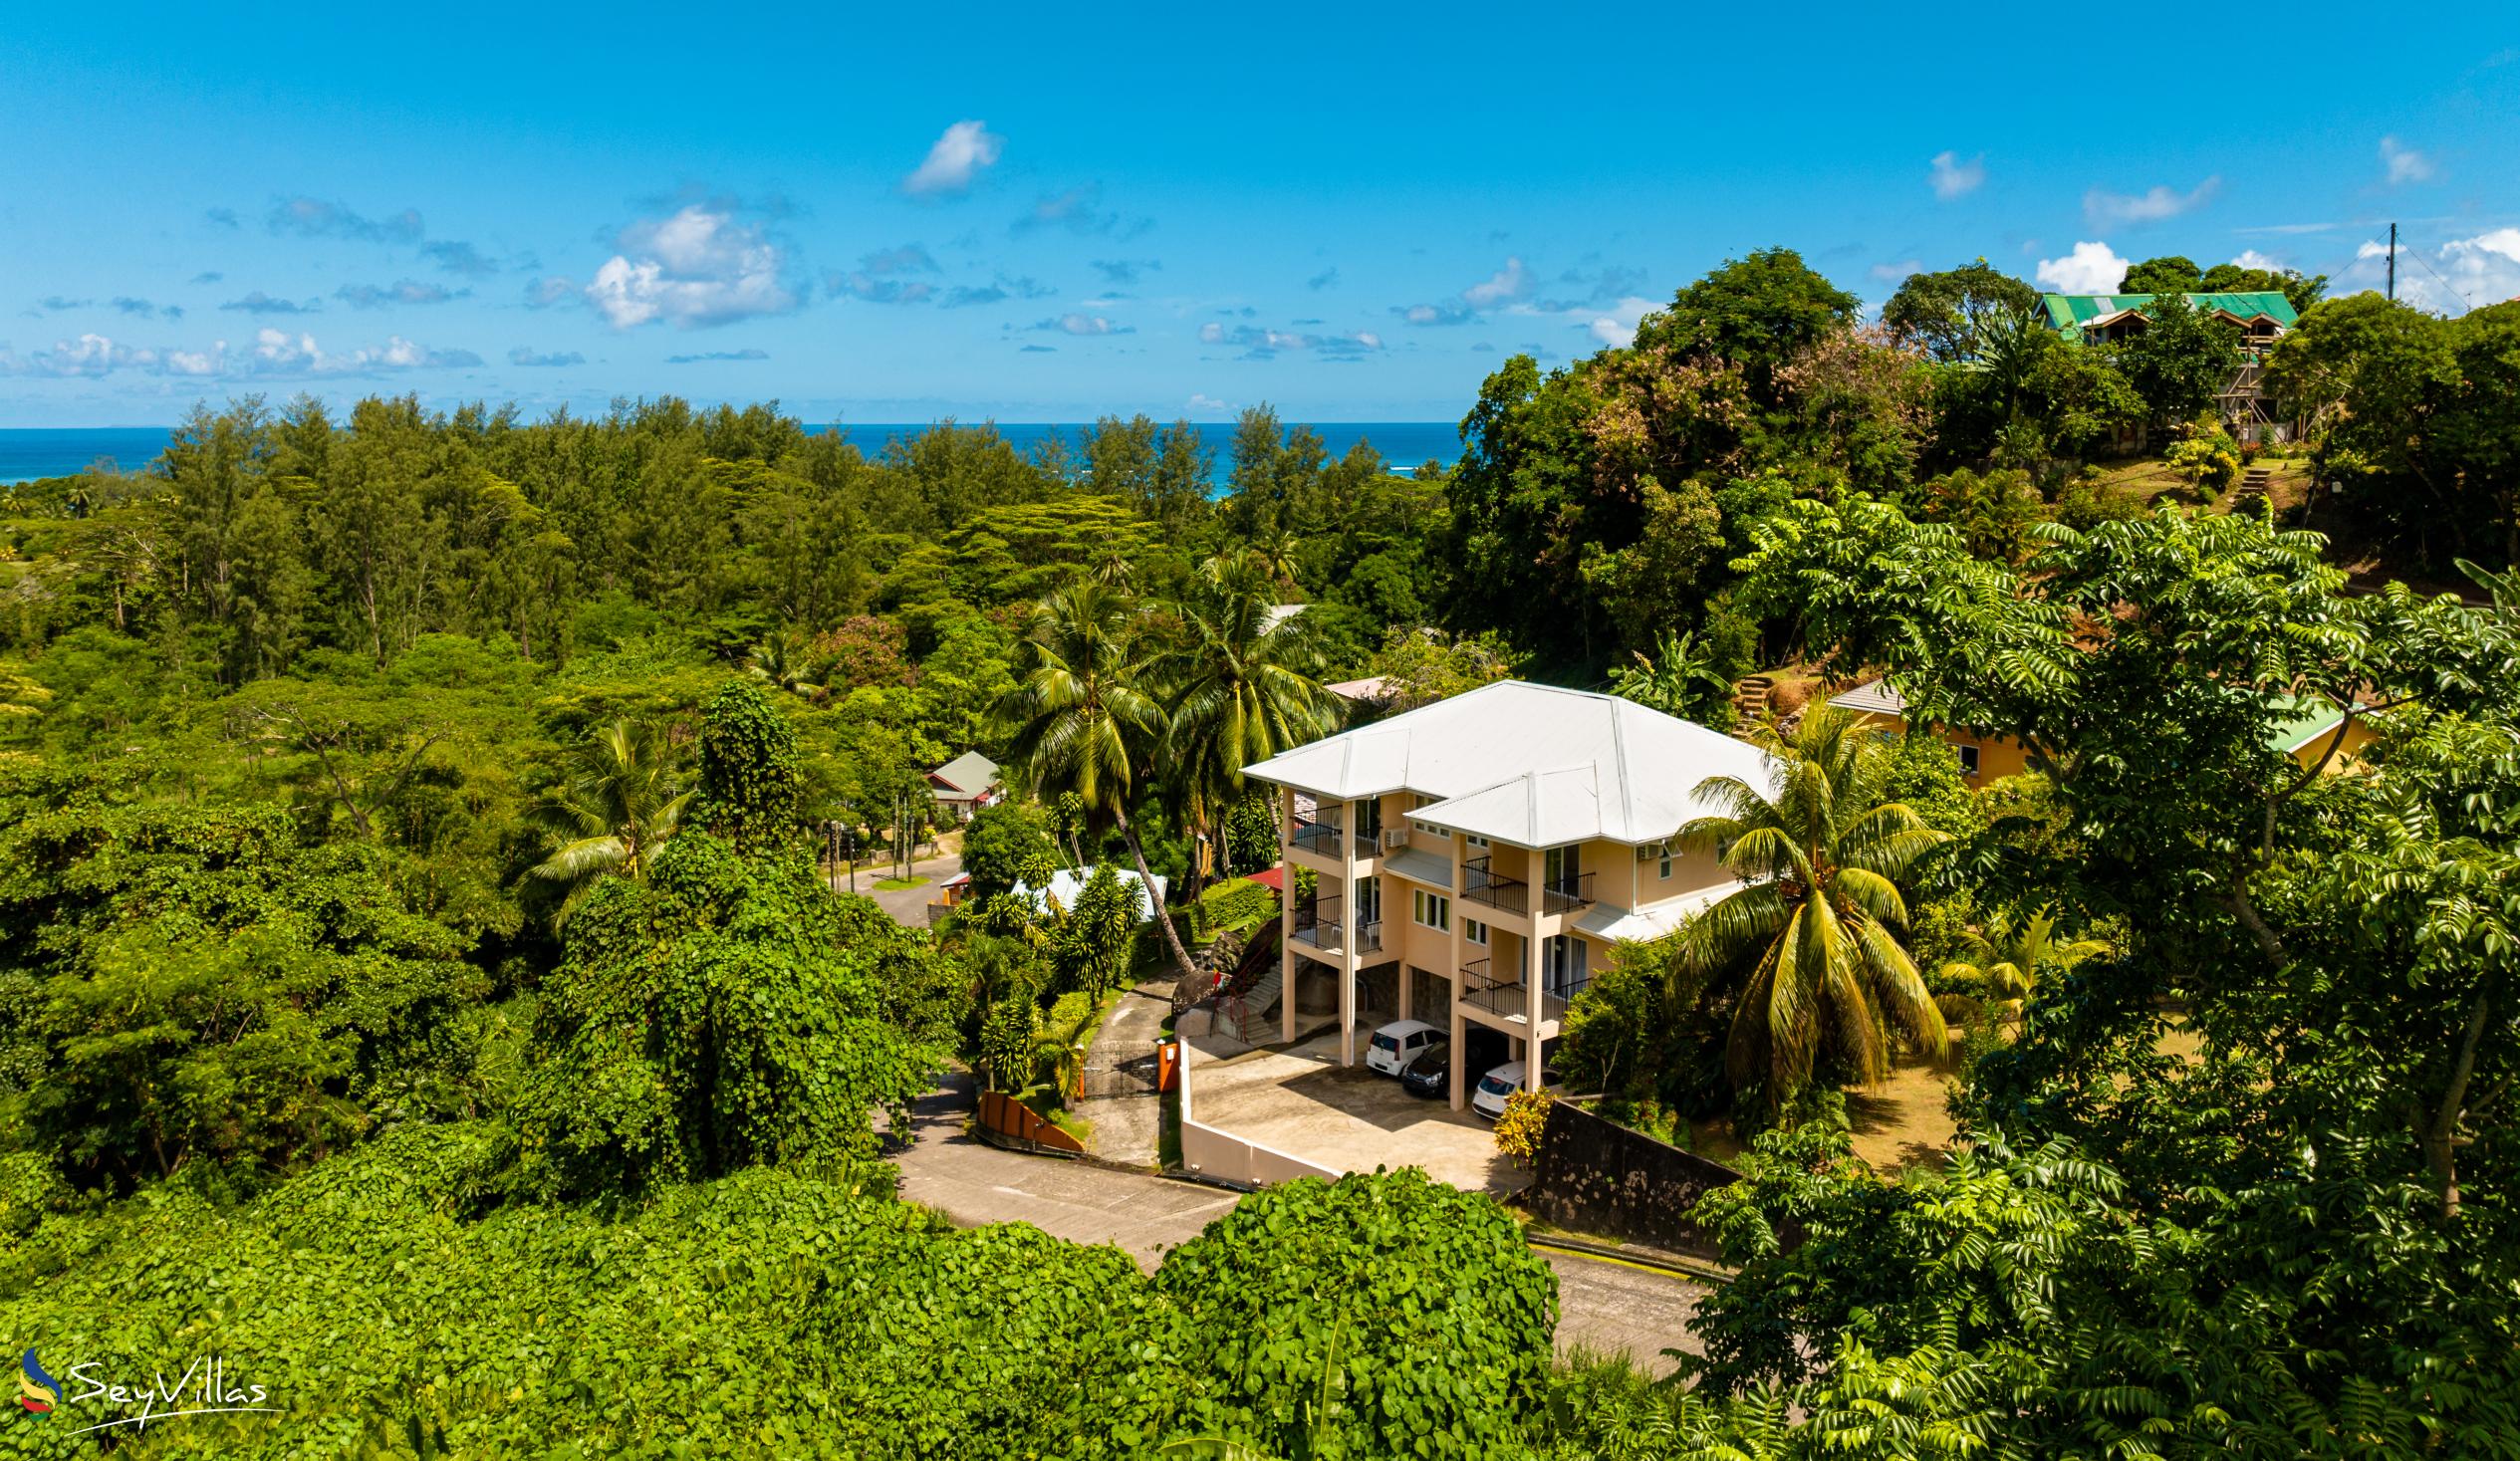 Photo 1: JAIDSS Holiday Apartments - Outdoor area - Mahé (Seychelles)